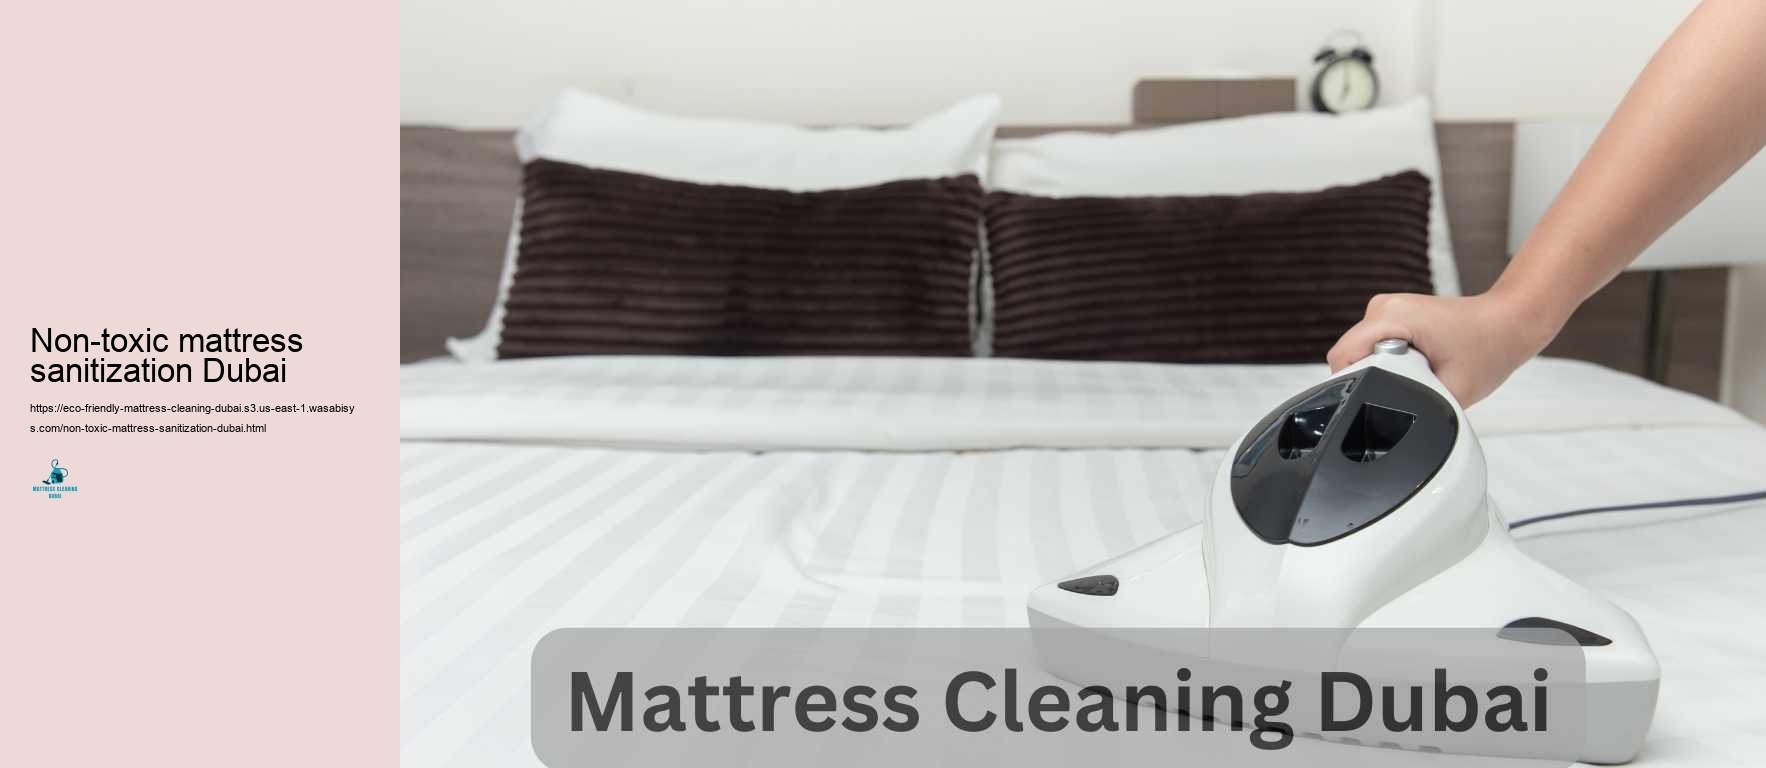 Non-toxic mattress sanitization Dubai